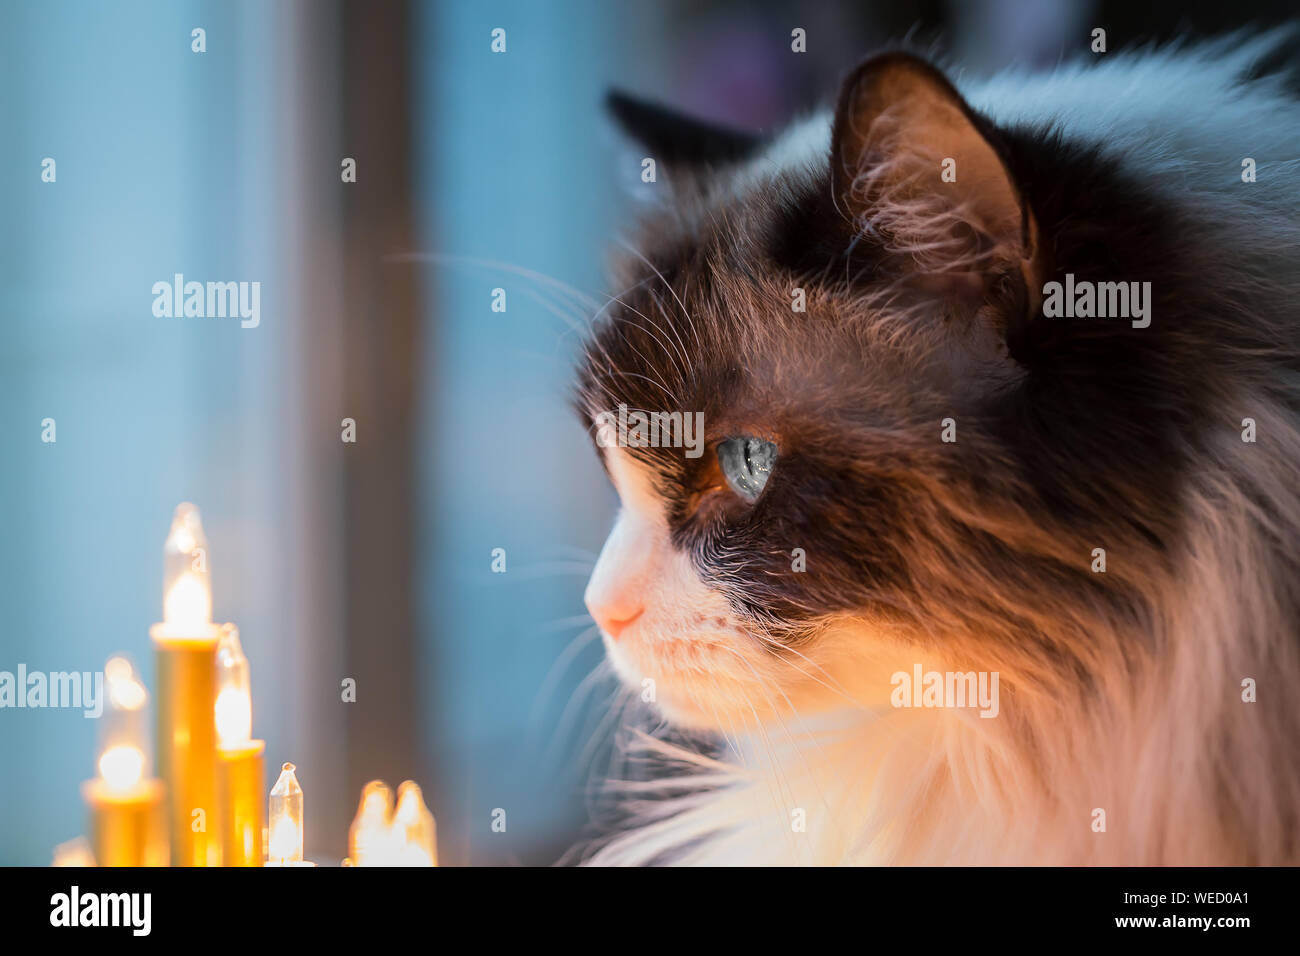 Cat Looking At Illuminated Light Stock Photo